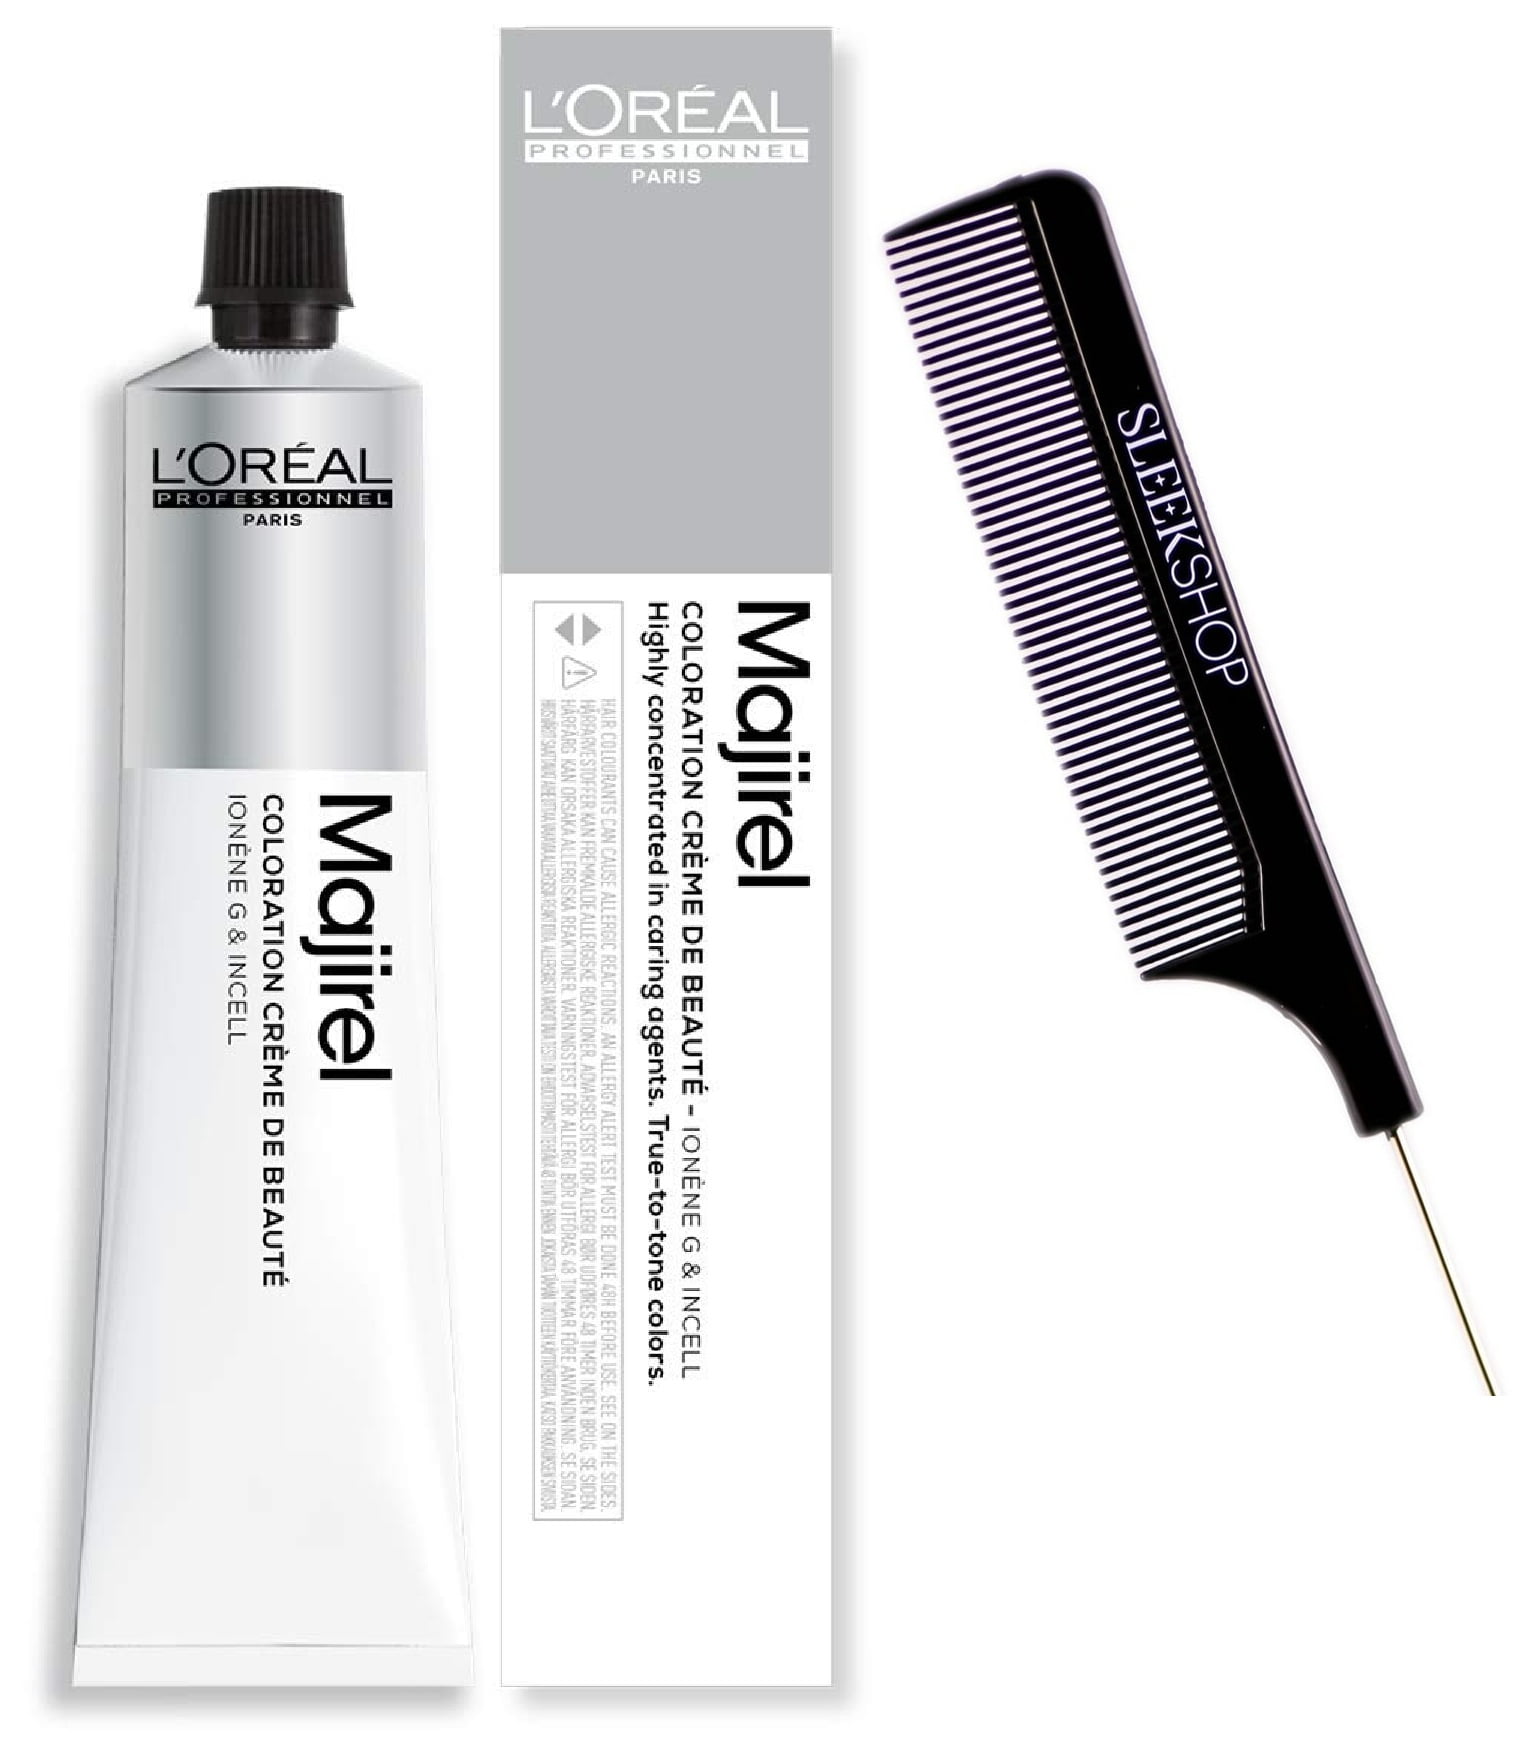  / 3GRv , L'oreal MAJIREL Professional Cream Permanent Hair Color Dye  Haircolor Ionene G & Incell Loreal - Pack of 3 w/ Sleek Pin Comb -  